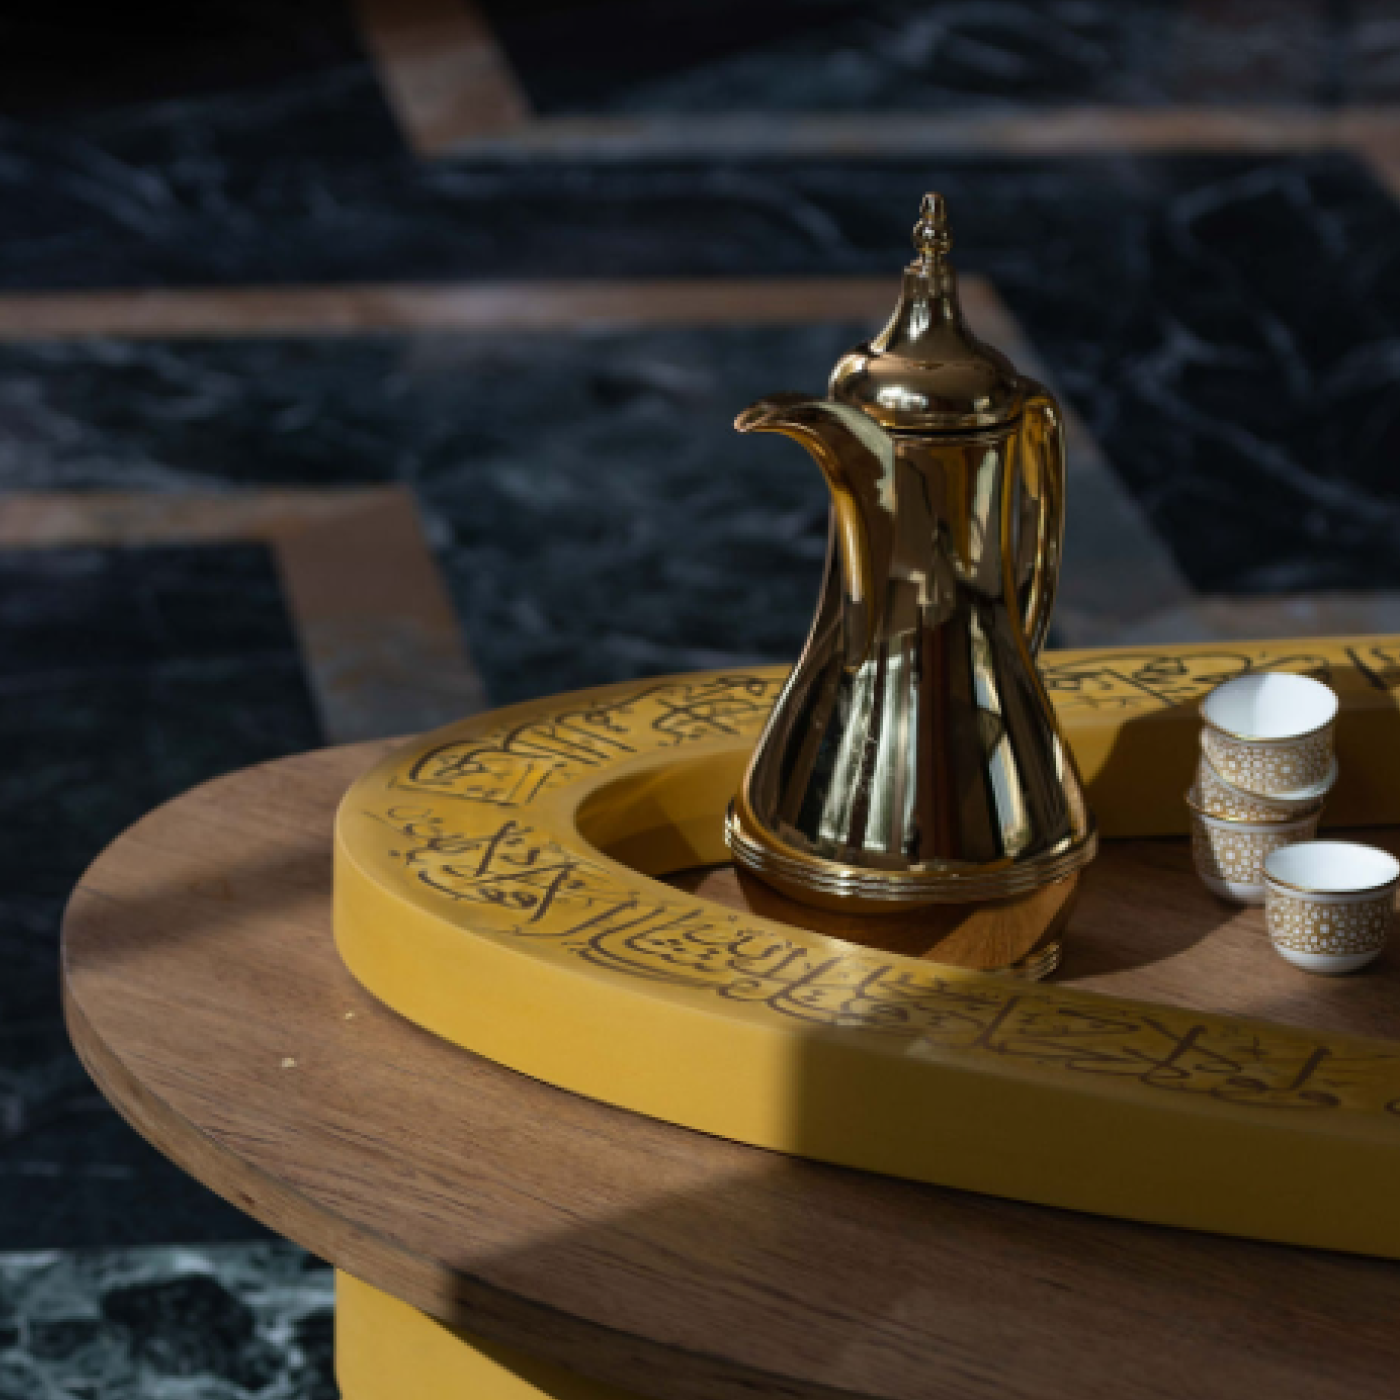 HAA Concrete Coffee Table by Baytik Design Dubai